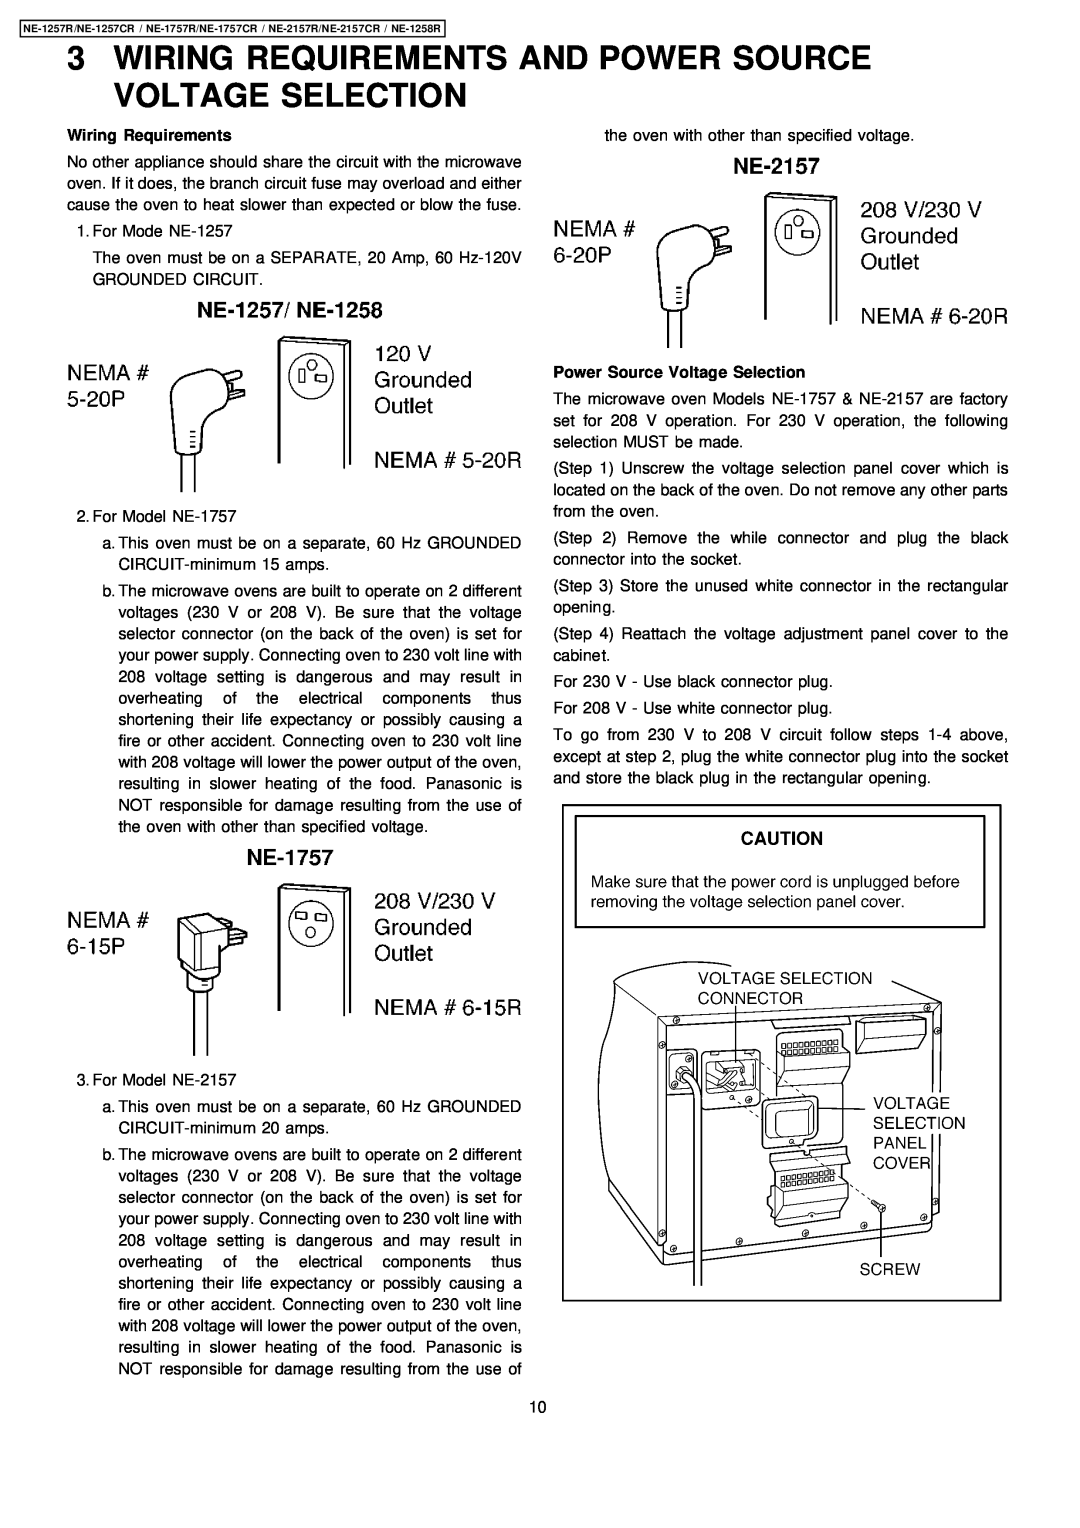 Panasonic NE-1757CR, NE-2157CR, NE-1257CR manual Wiring Requirements, Power Source Voltage Selection 